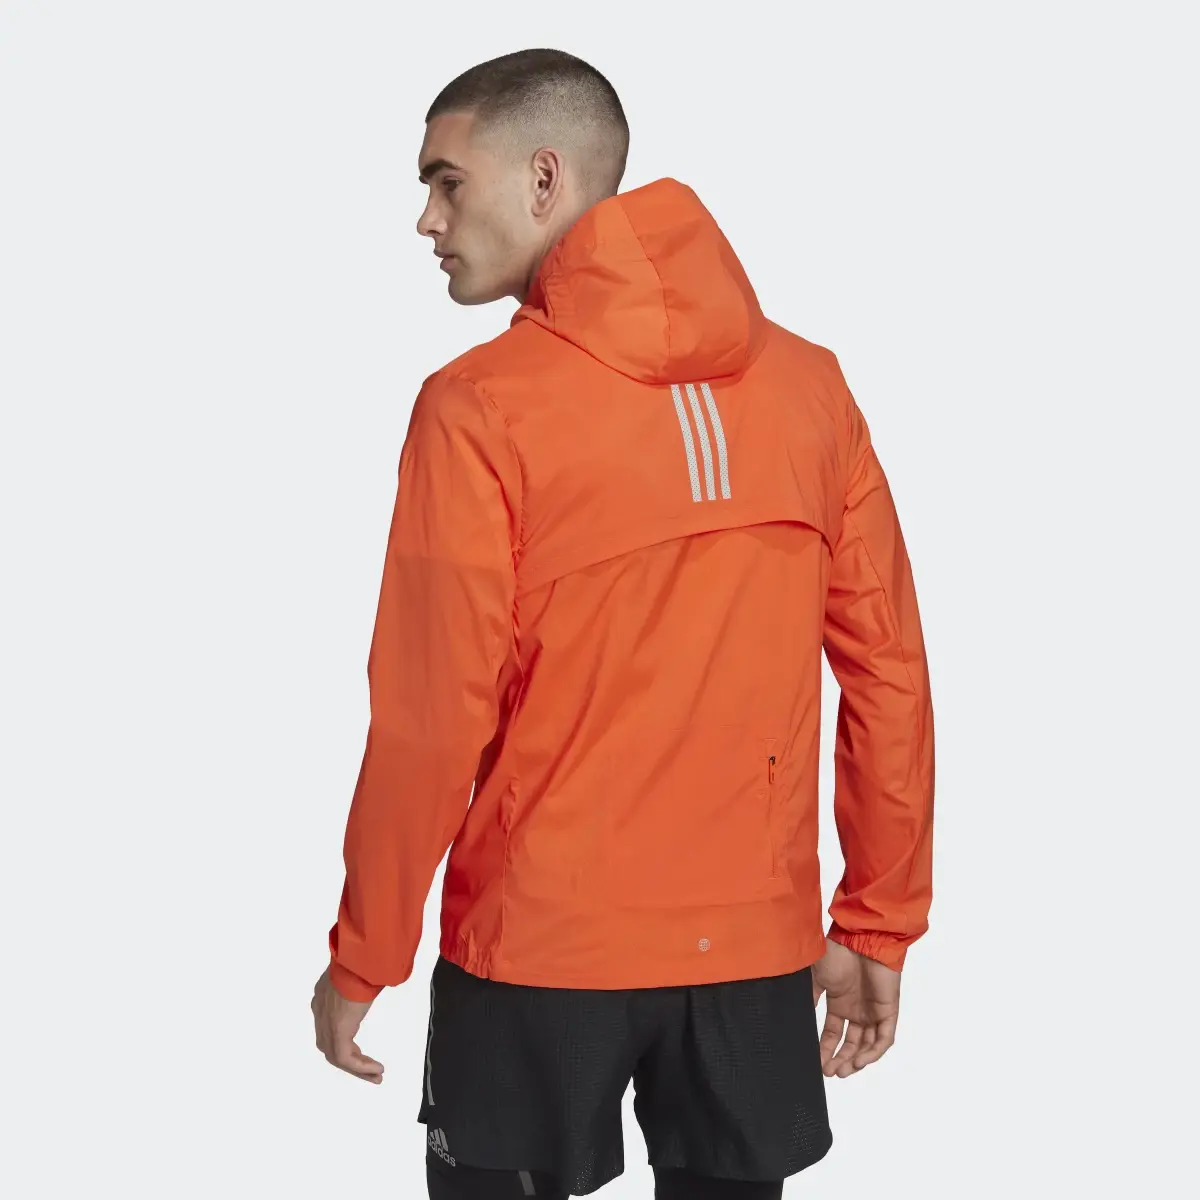 Adidas Marathon Jacket. 3